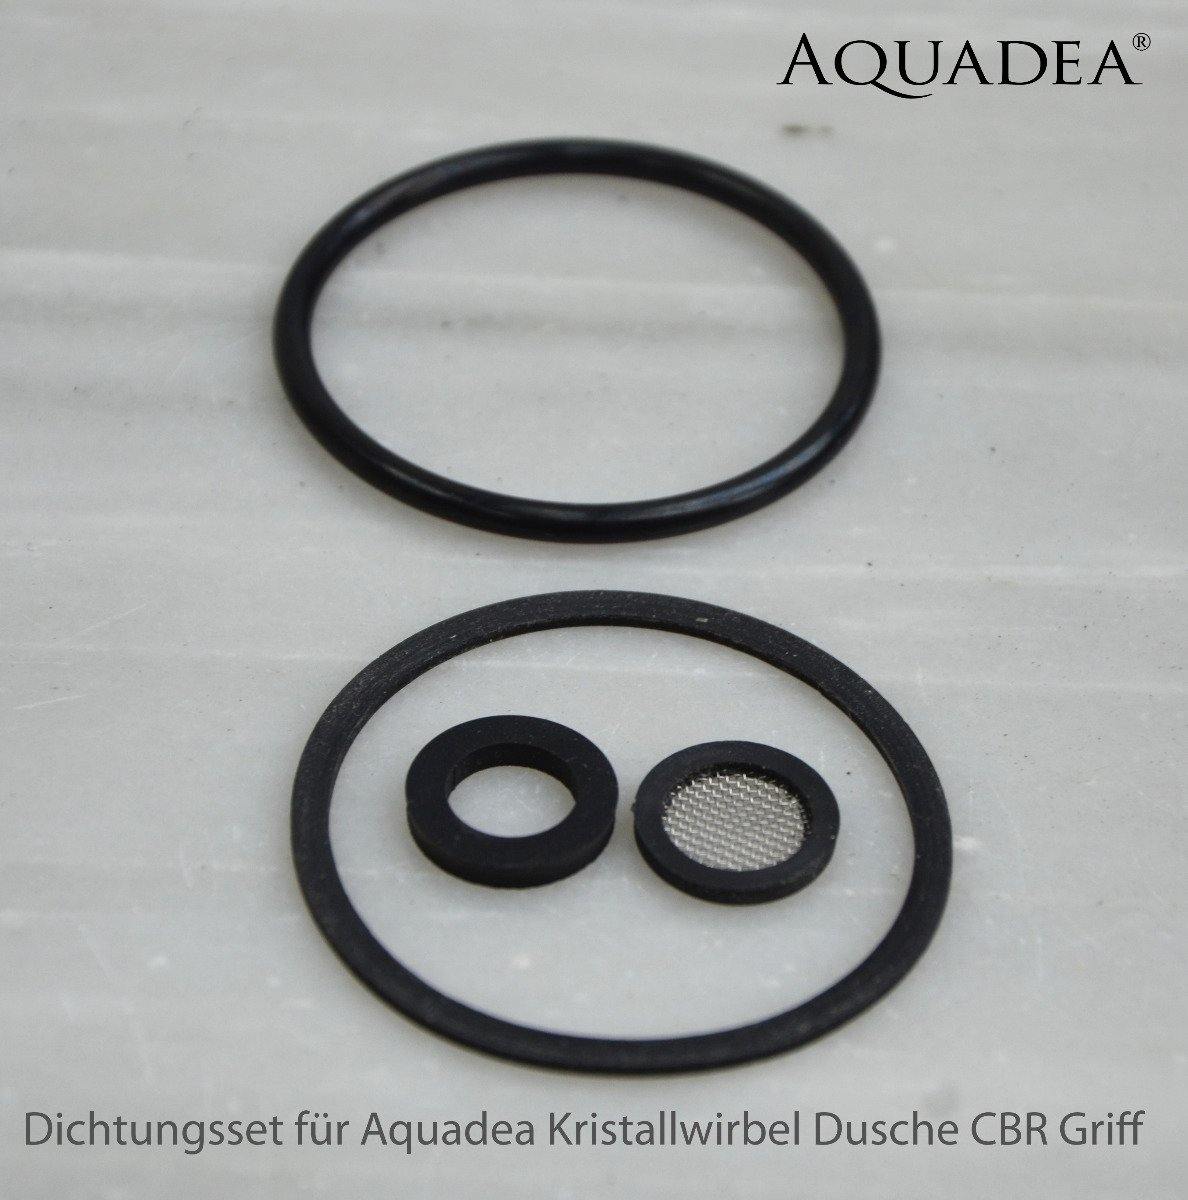 Dichtungsset für Aquadea Dusche – AQUADEA GmbH